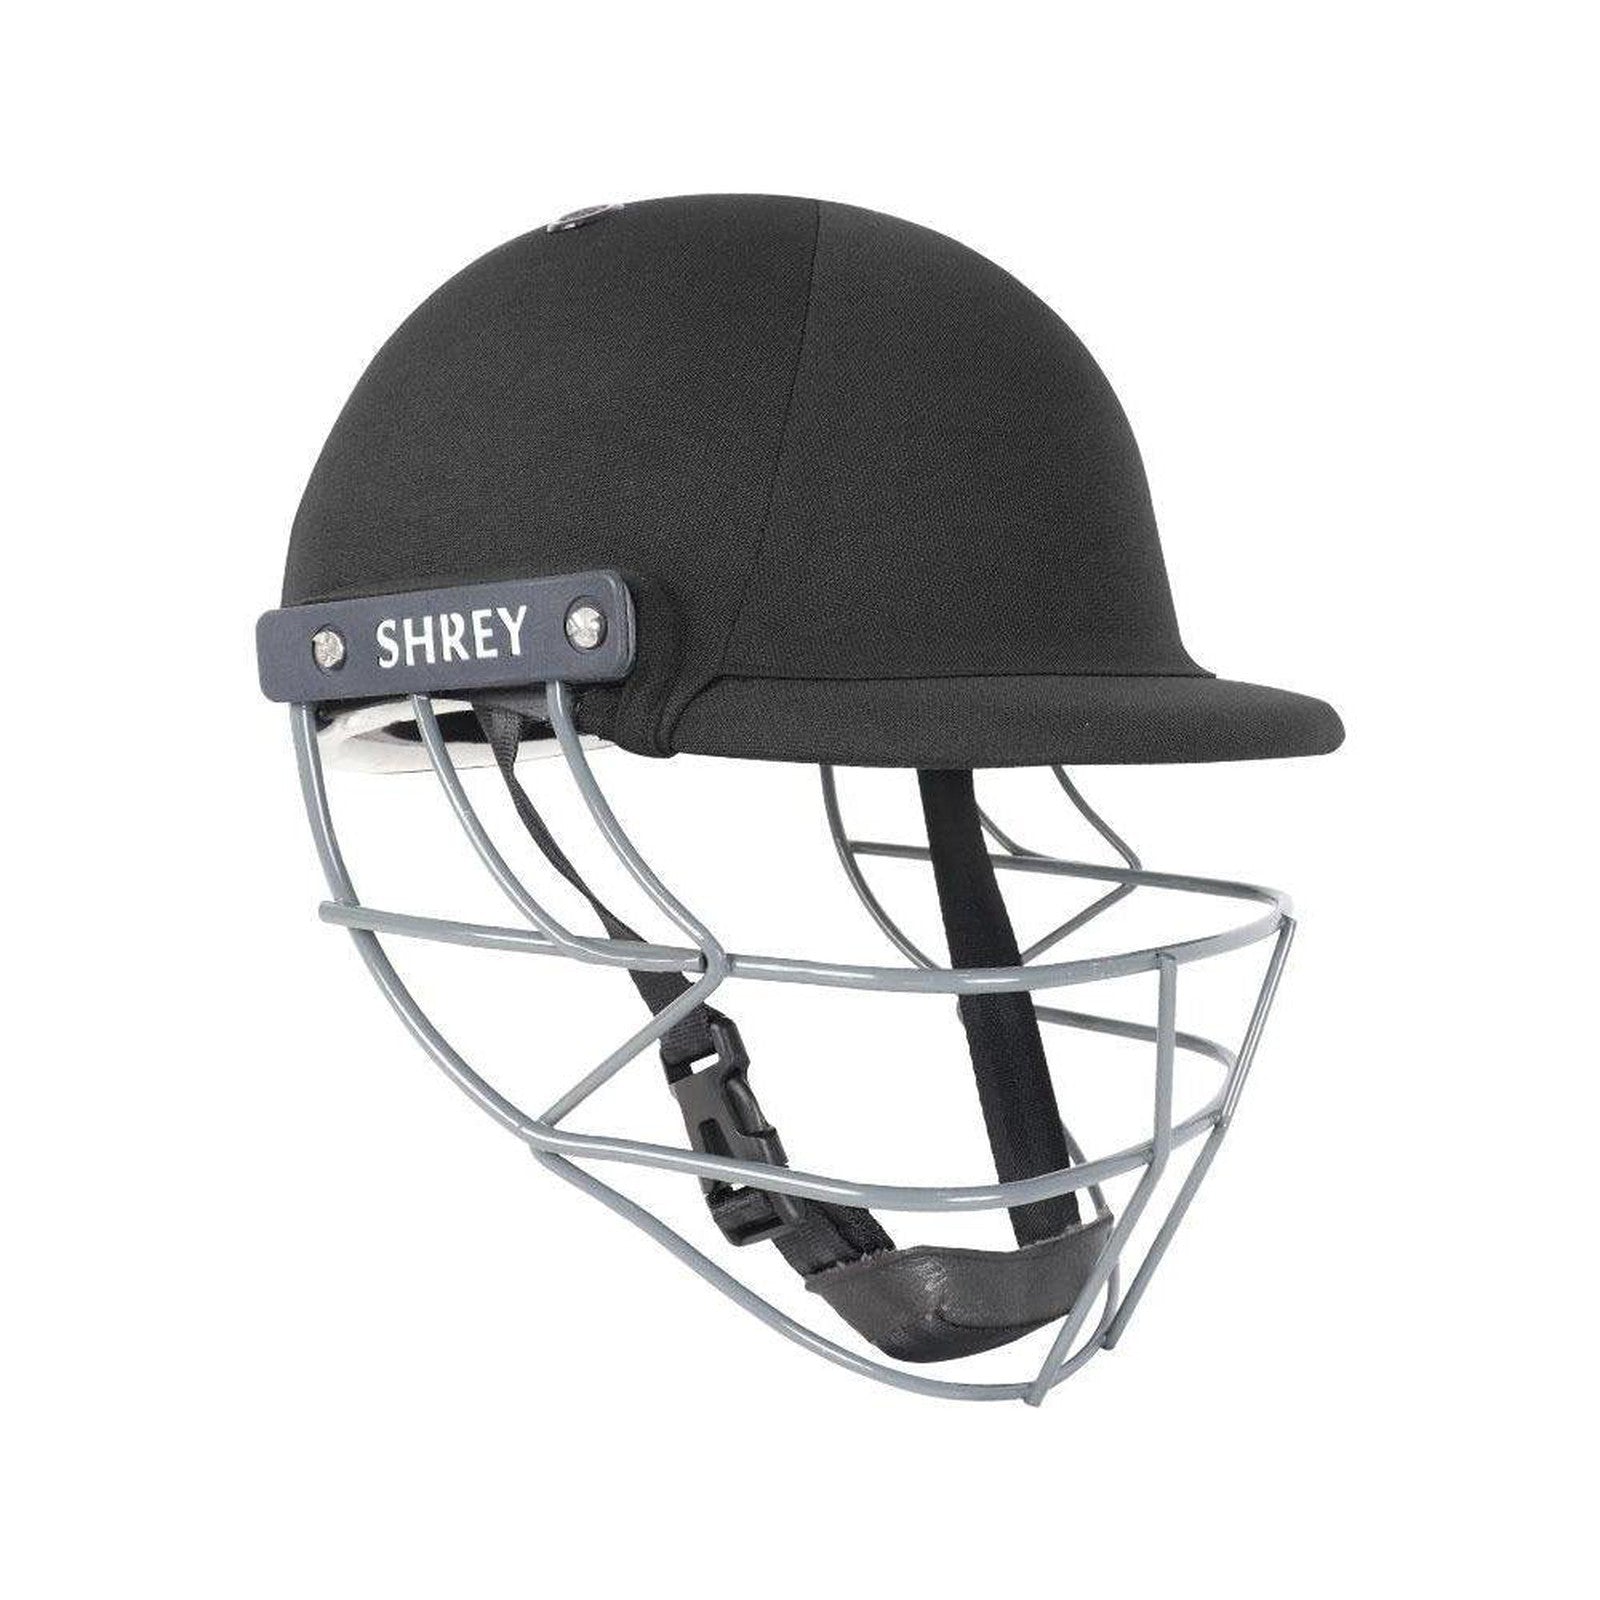 Shrey Performance 2.0 Cricket Helmet With Mild Steel - Black Senior